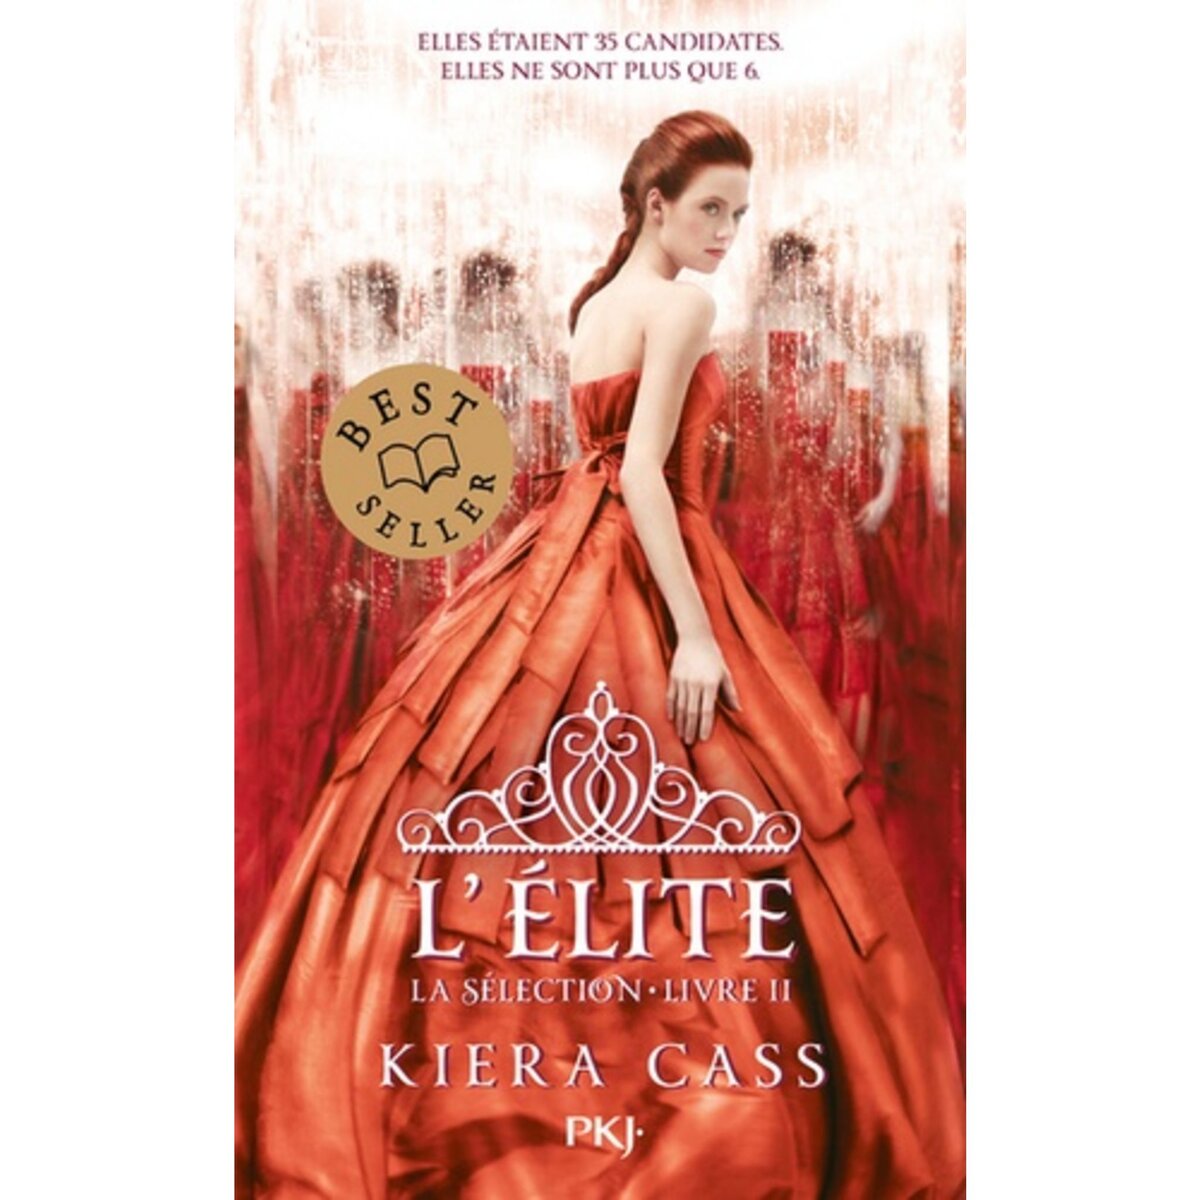  LA SELECTION TOME 2 : L'ELITE, Cass Kiera